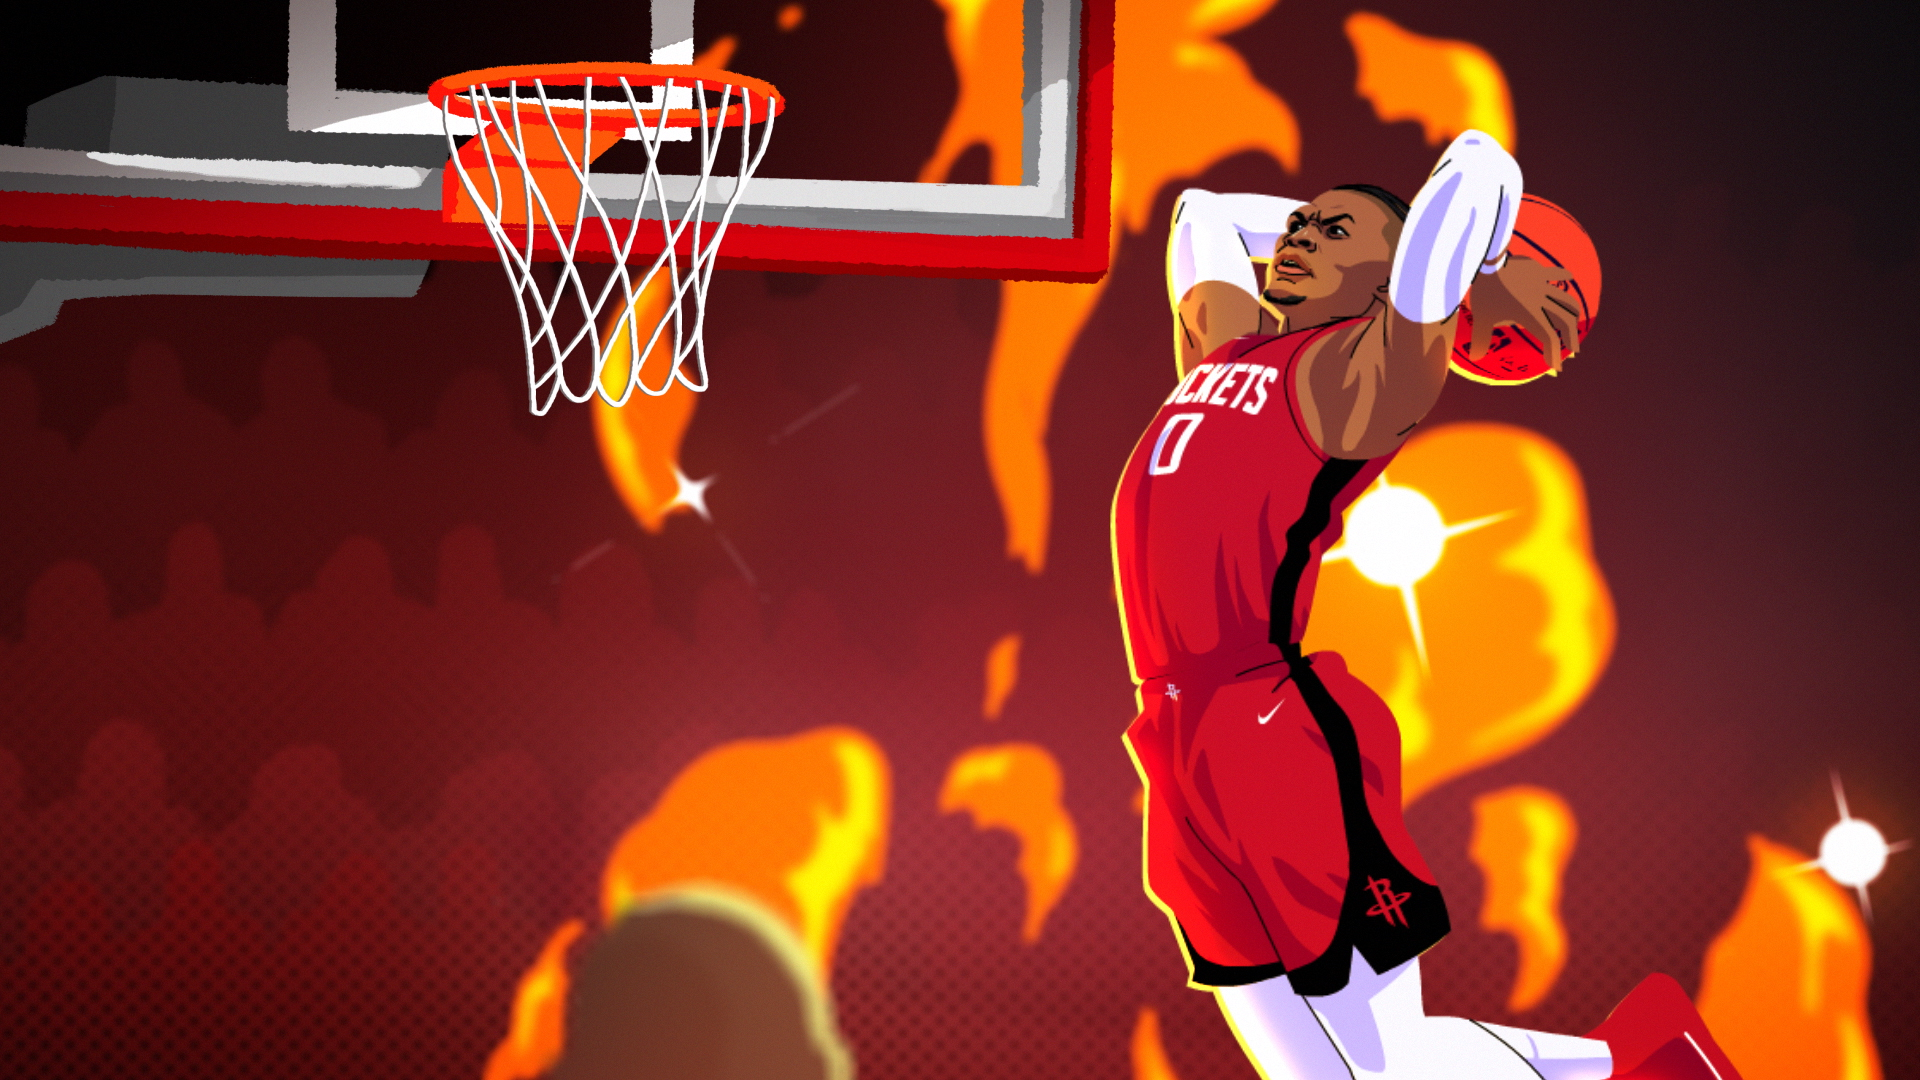 Basketball Player Wallpaper Hd - Chicago bulls michael jordan,scottie pippe...